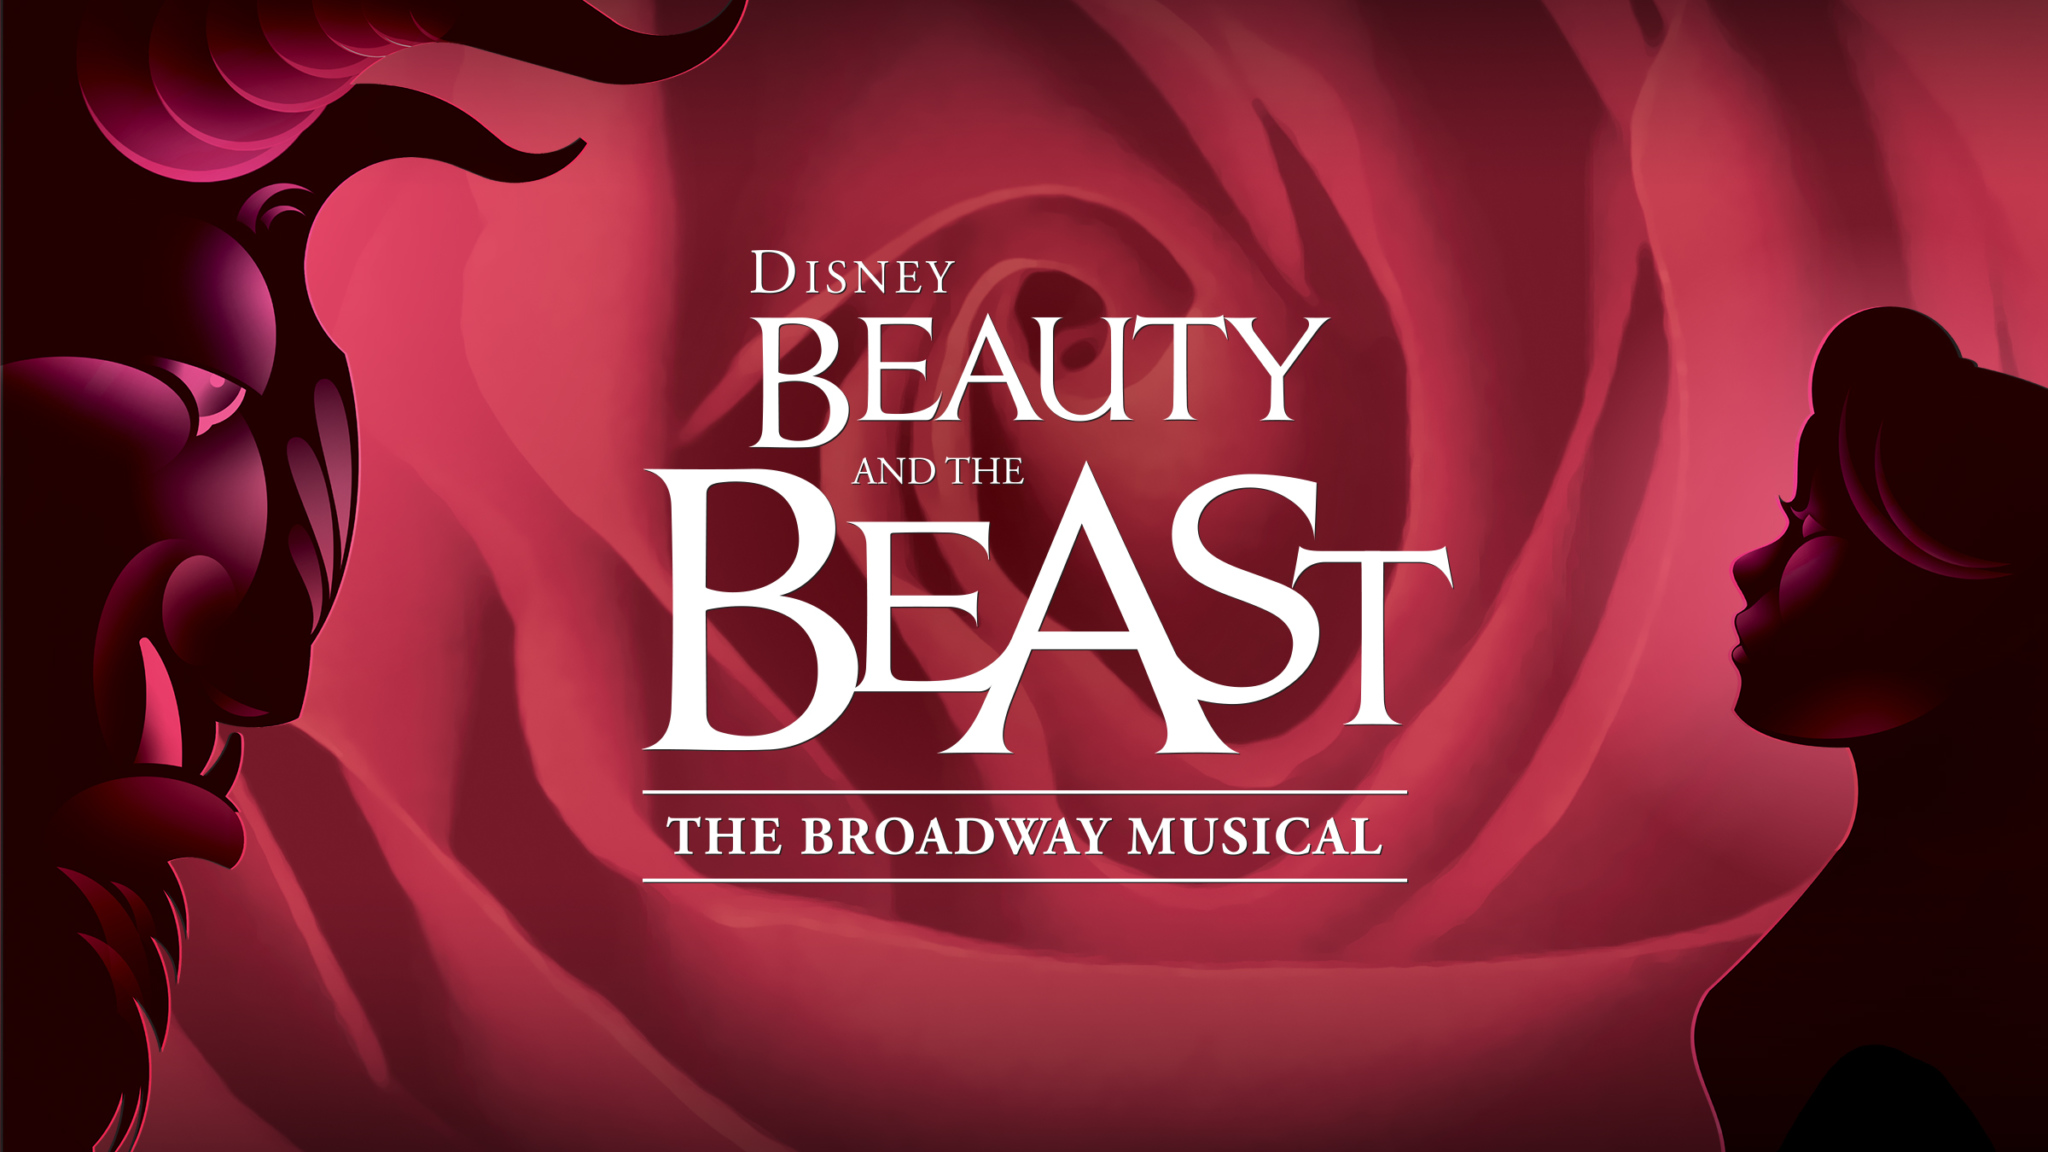 Песня красавица на английском. Musical Beauty and the Beast Broadway. Beauty and the Beast лого. Школьный театр Beauty and the Beast. Beauty and the Beast poster.